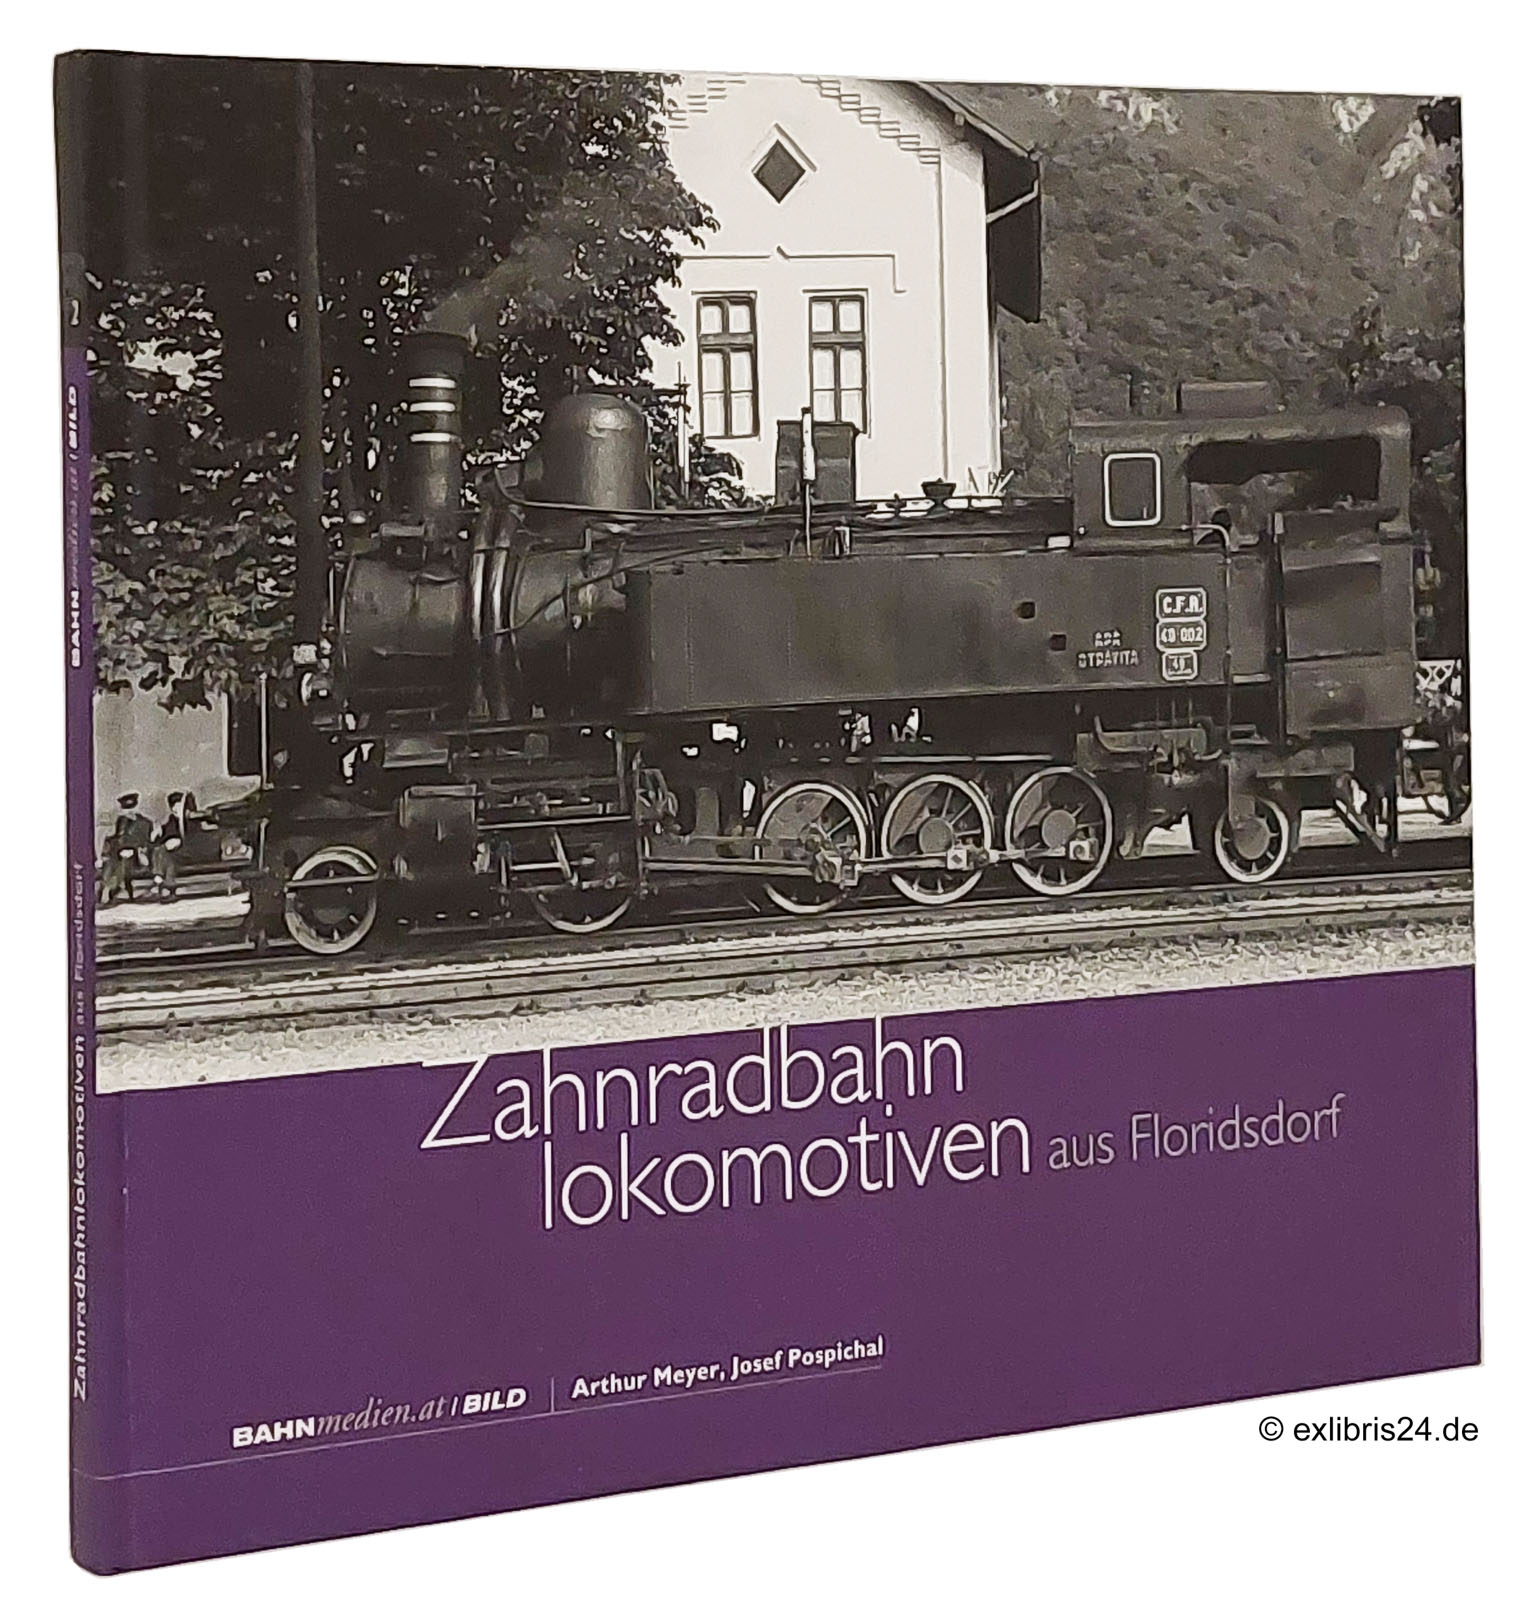 Zahnradbahnlokomotiven aus Floridsdorf : (Reihe: bahnmedien.at/bild, Band 2) - Meyer, Arthur; Pospichal, Josef